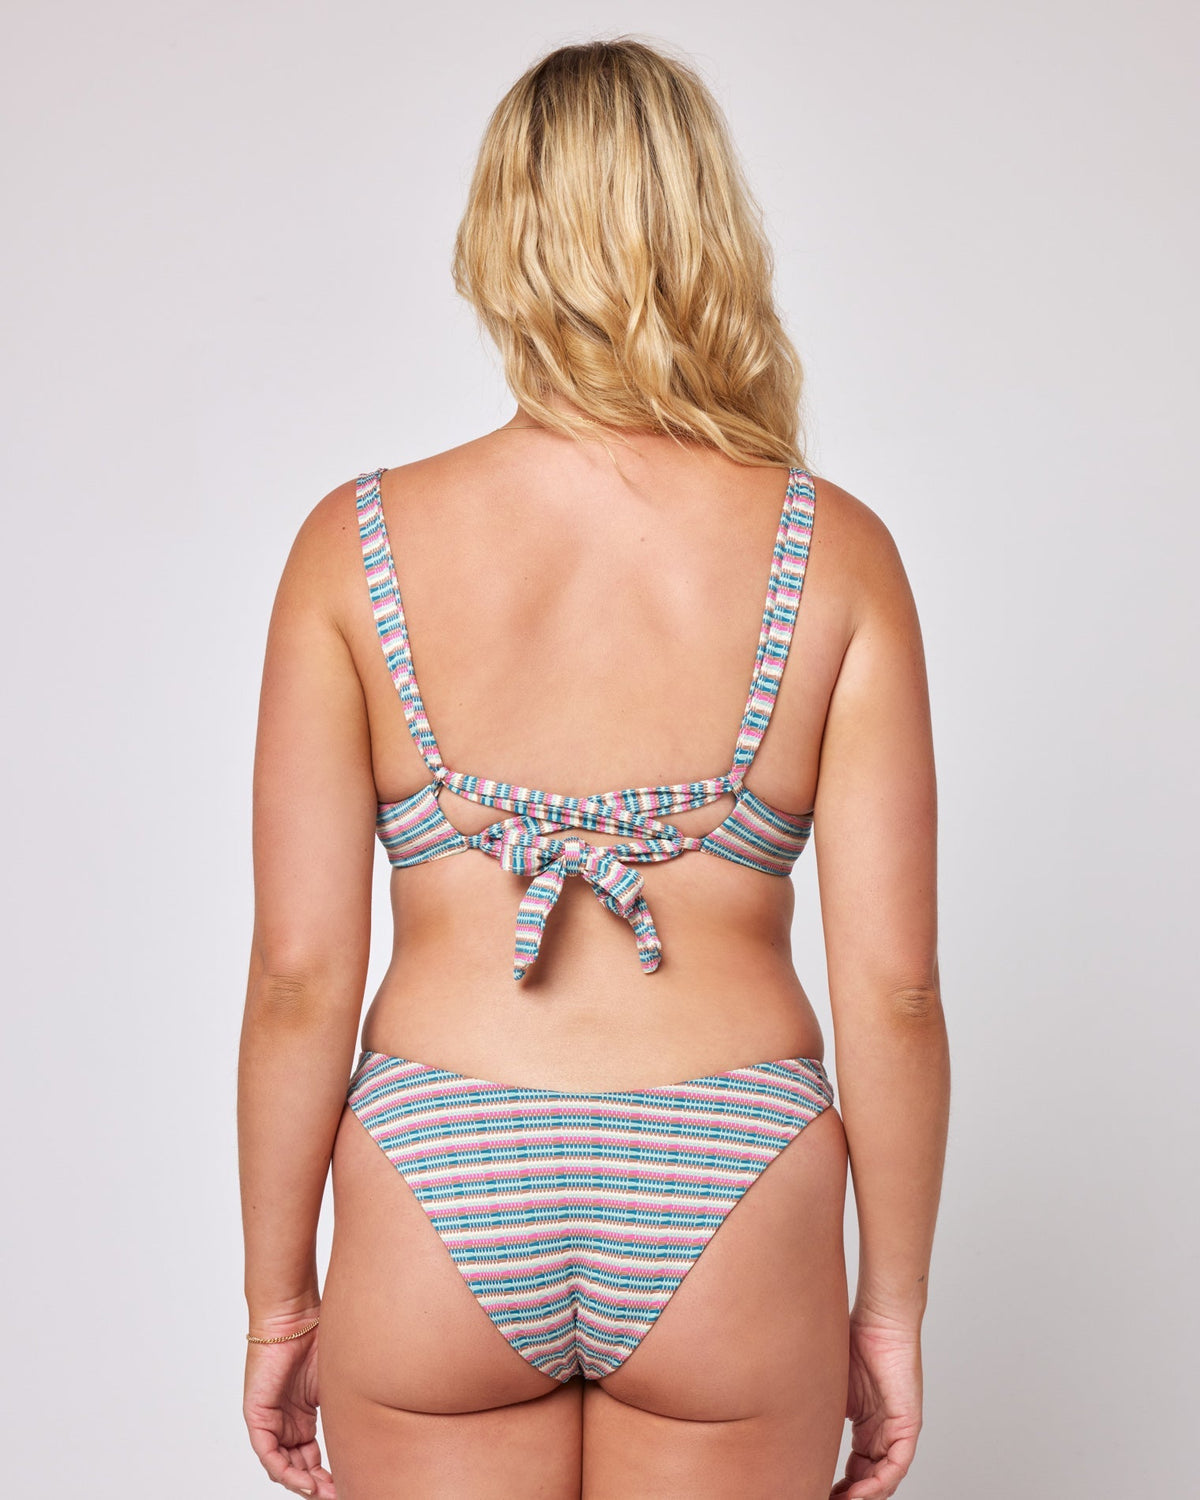 Pique Stripe Cabana Bikini Bottom - Vista Dreams Pique Stripe Vista Dreams Pique Stripe | Model: Sydney (size: XL) 